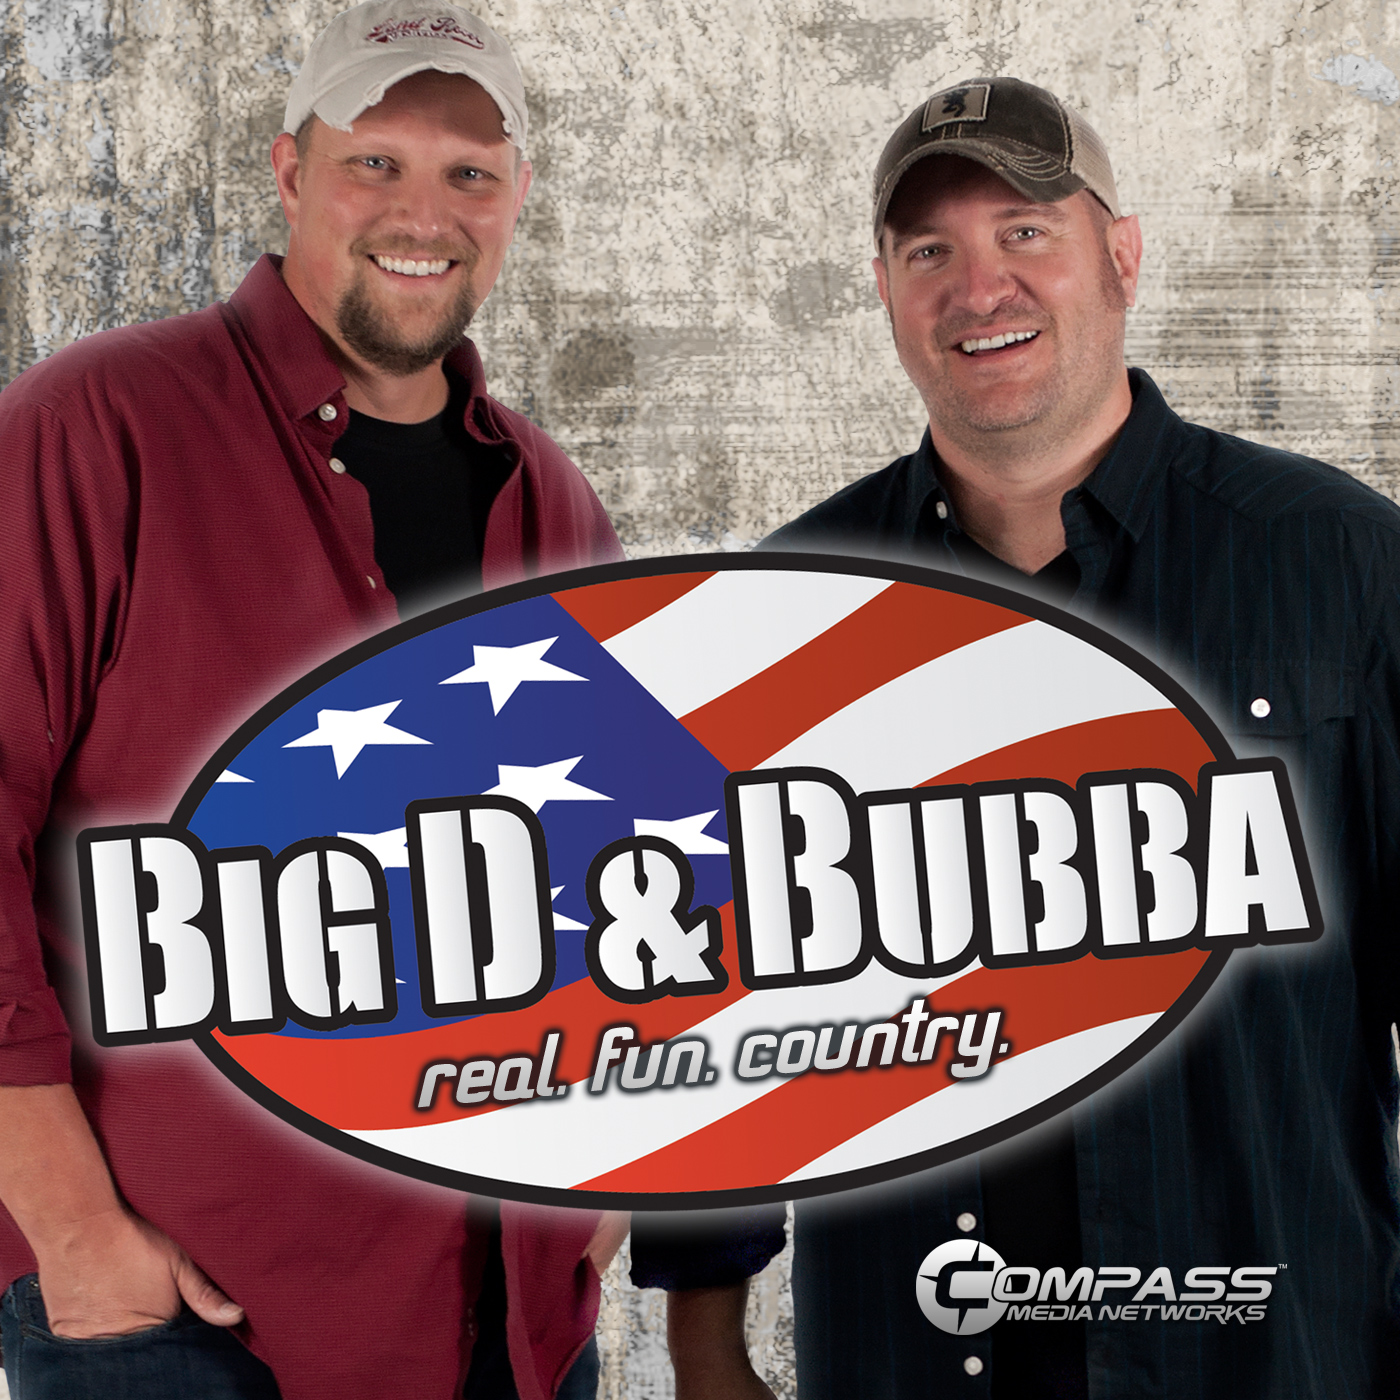 Big D and Bubba